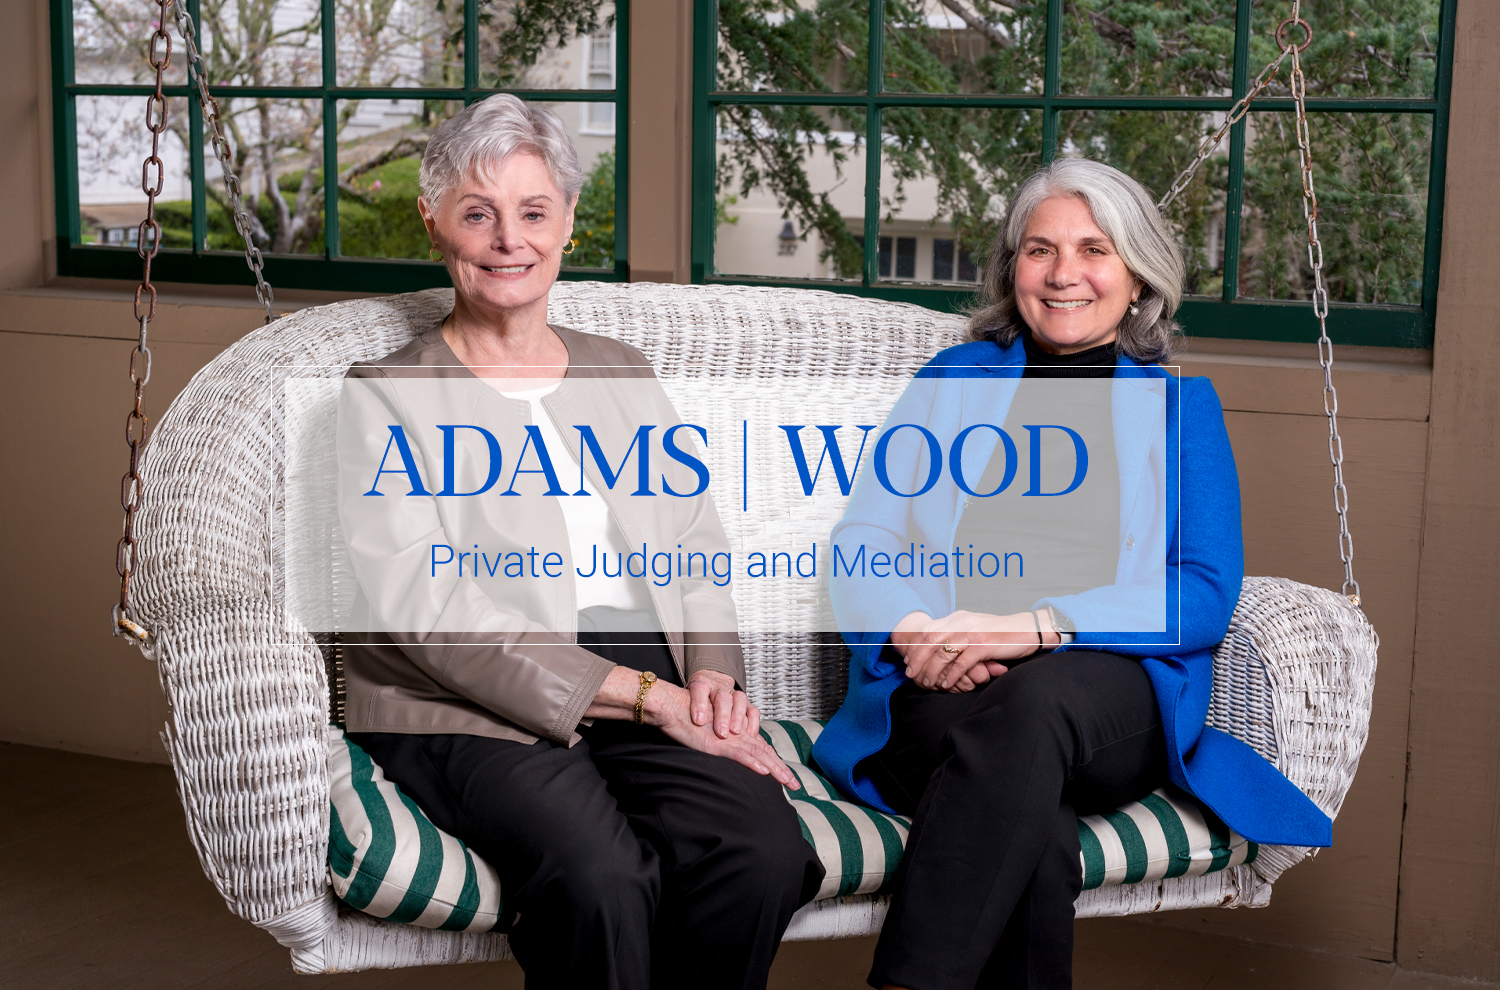 Judge Adams and Judge Wood 